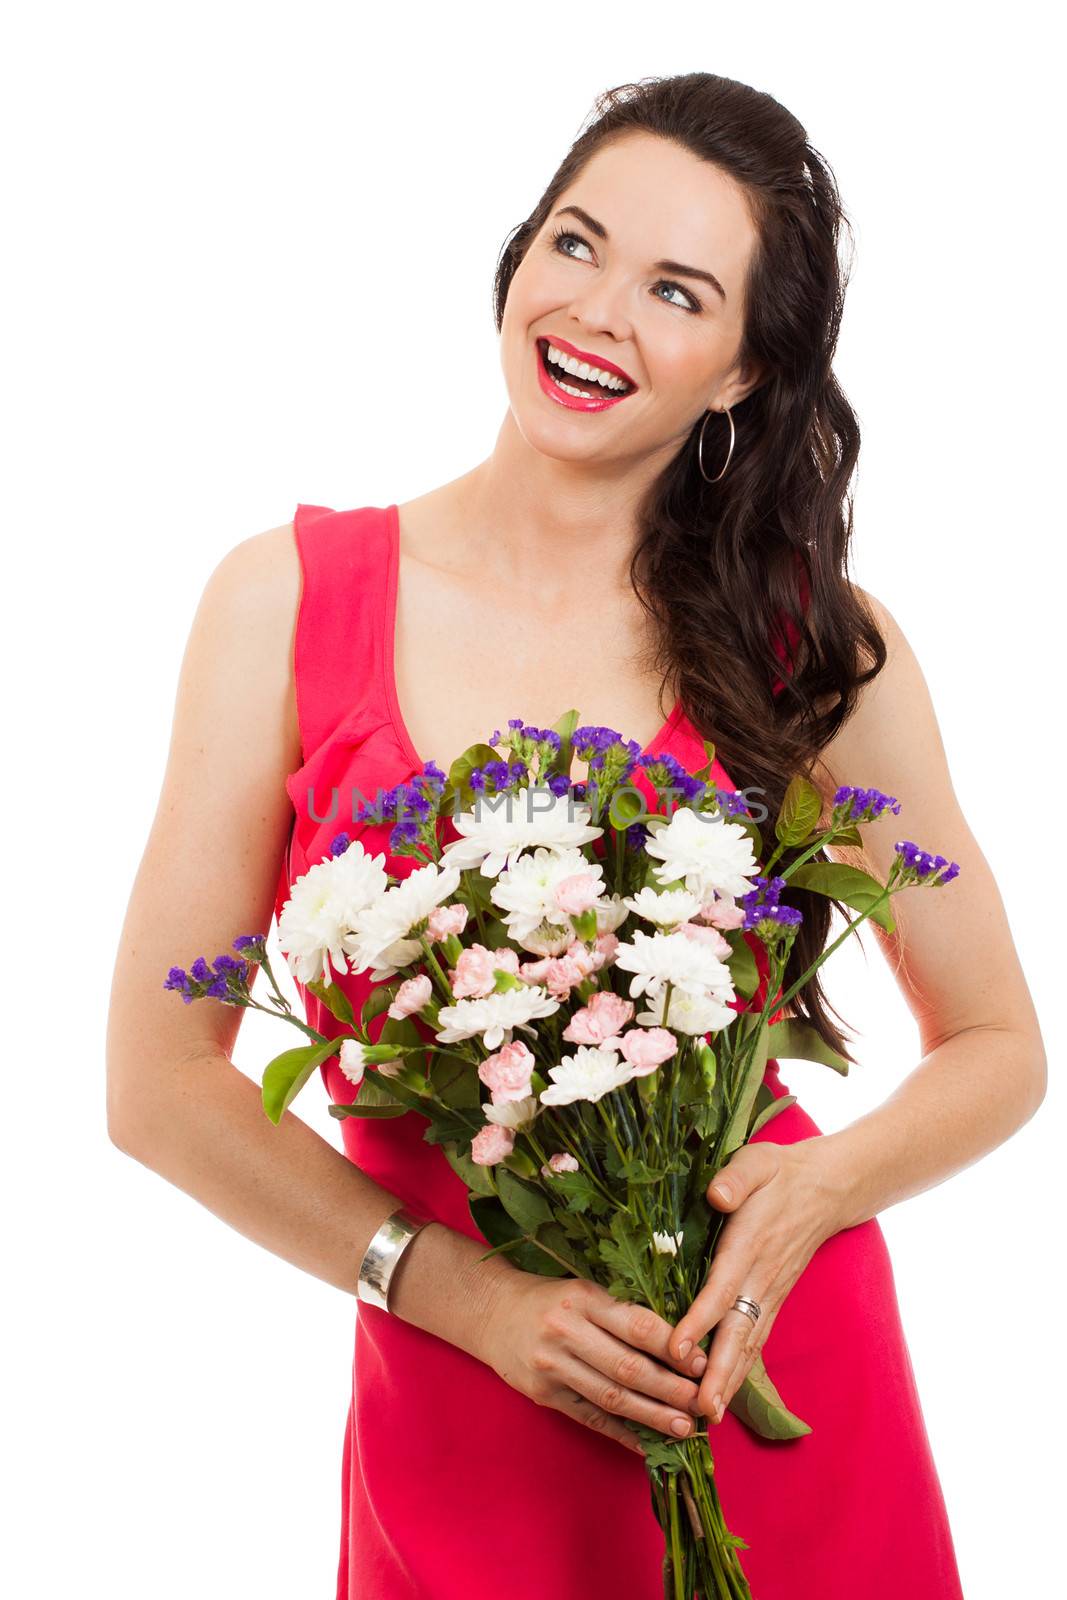 Smiling woman holding flowers by Jaykayl